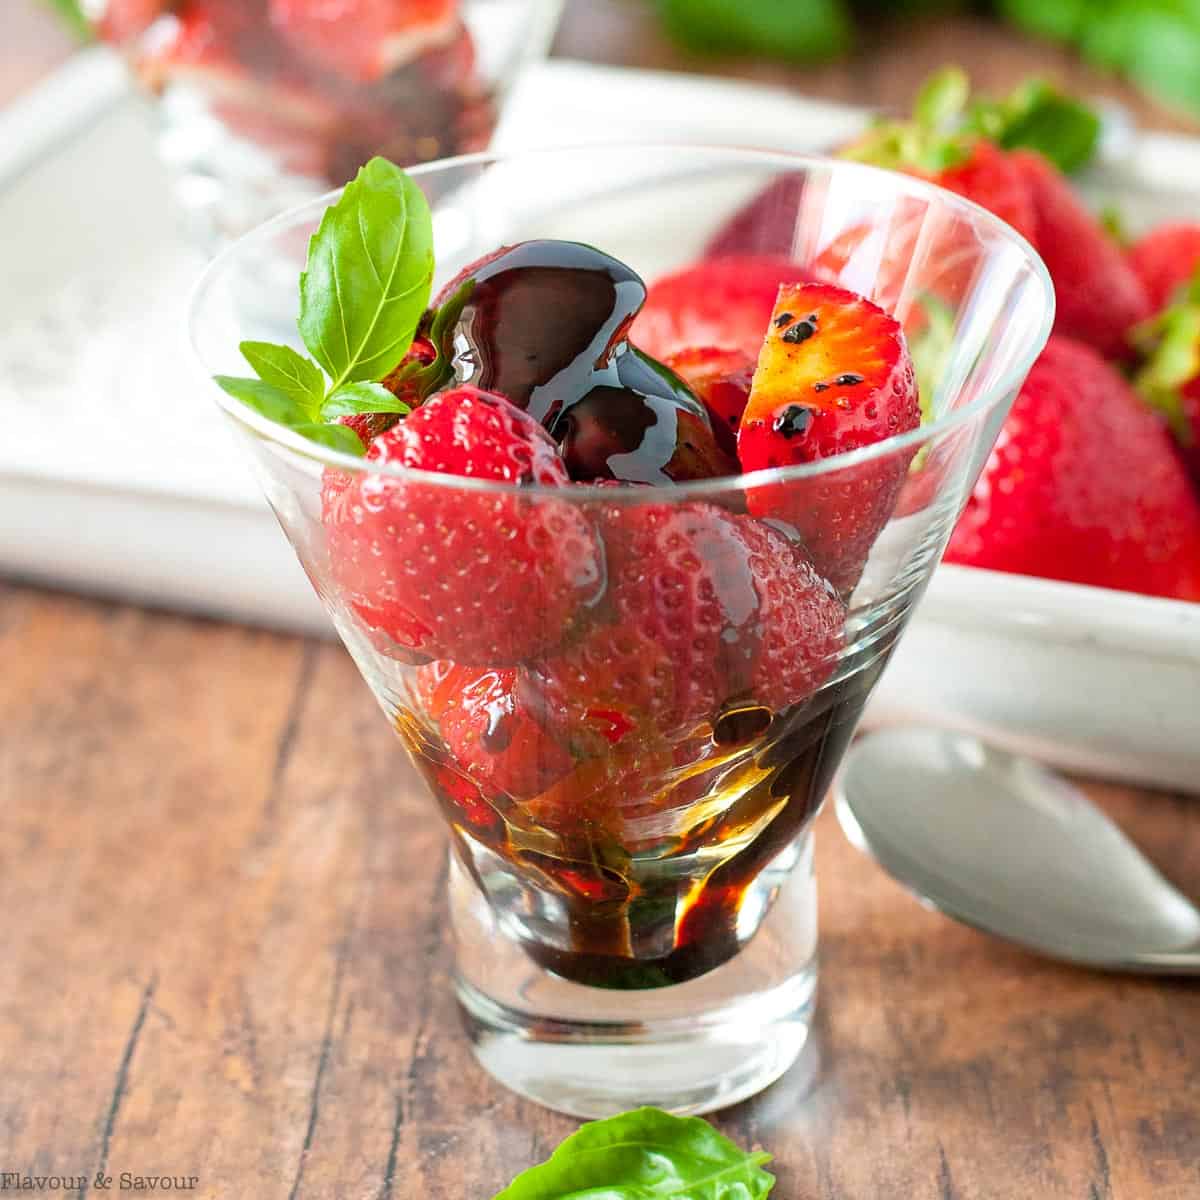 https://www.flavourandsavour.com/wp-content/uploads/2022/05/balsamic-strawberries-featured-sq.jpg